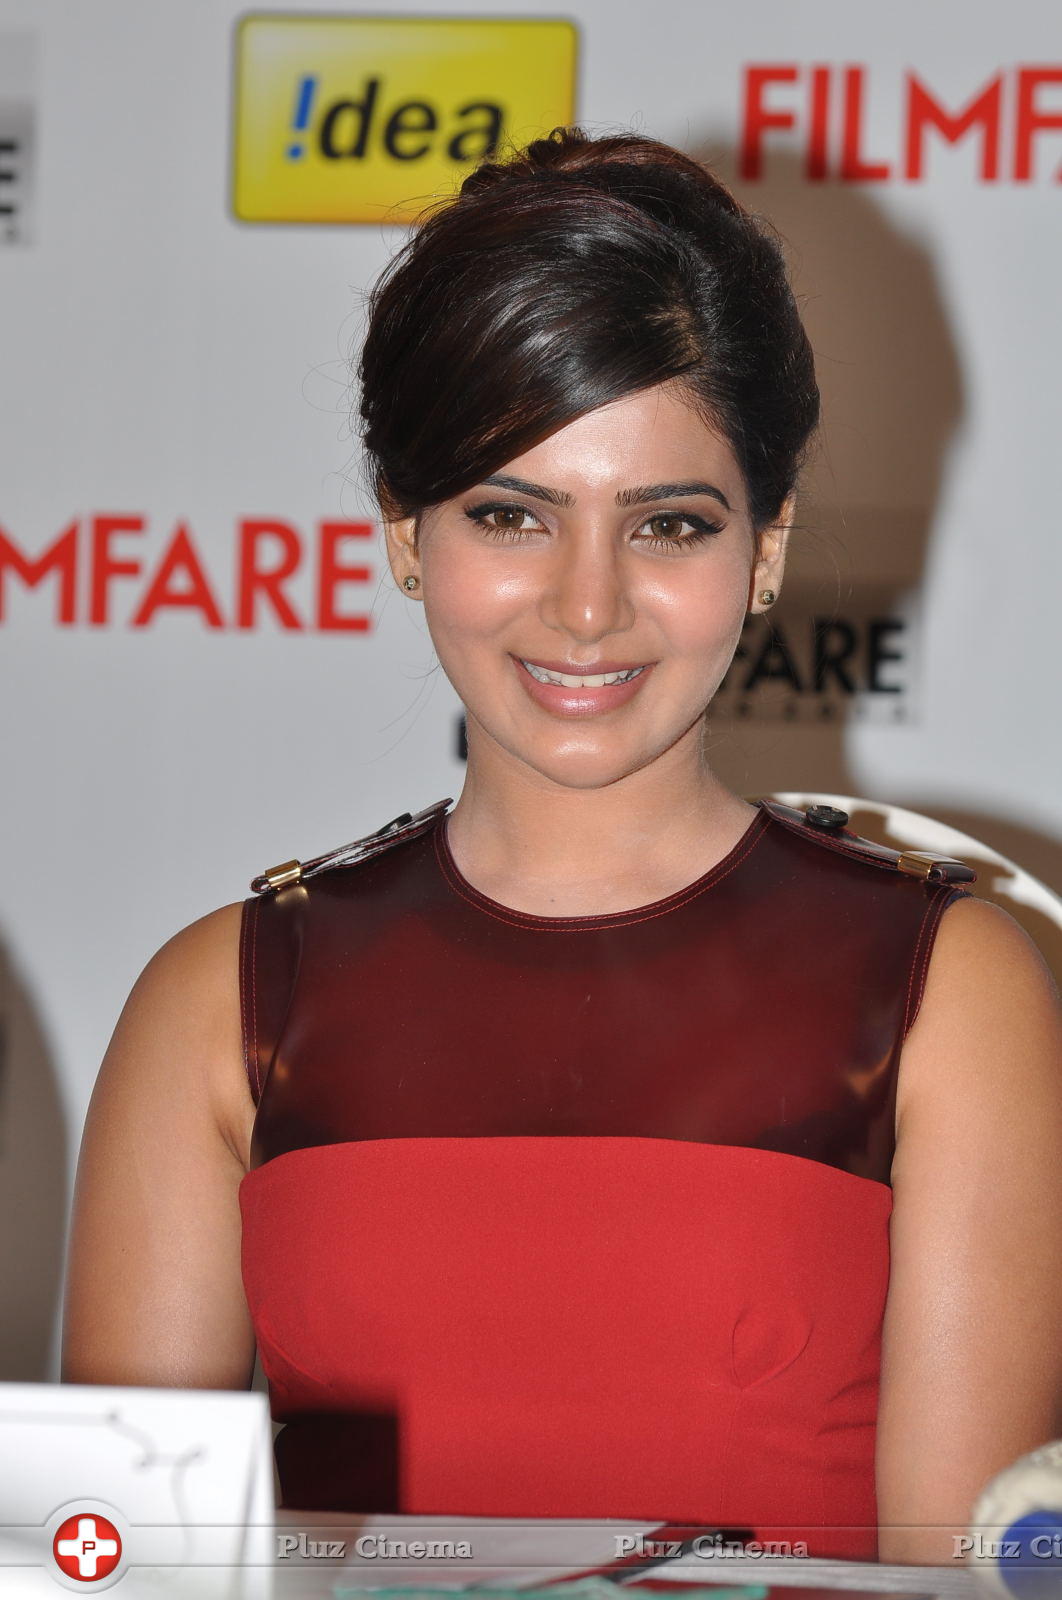 Samantha Ruth Prabhu - Samantha at 61st Idea Filmfare Awards 2013 Press Meet Photos | Picture 771855